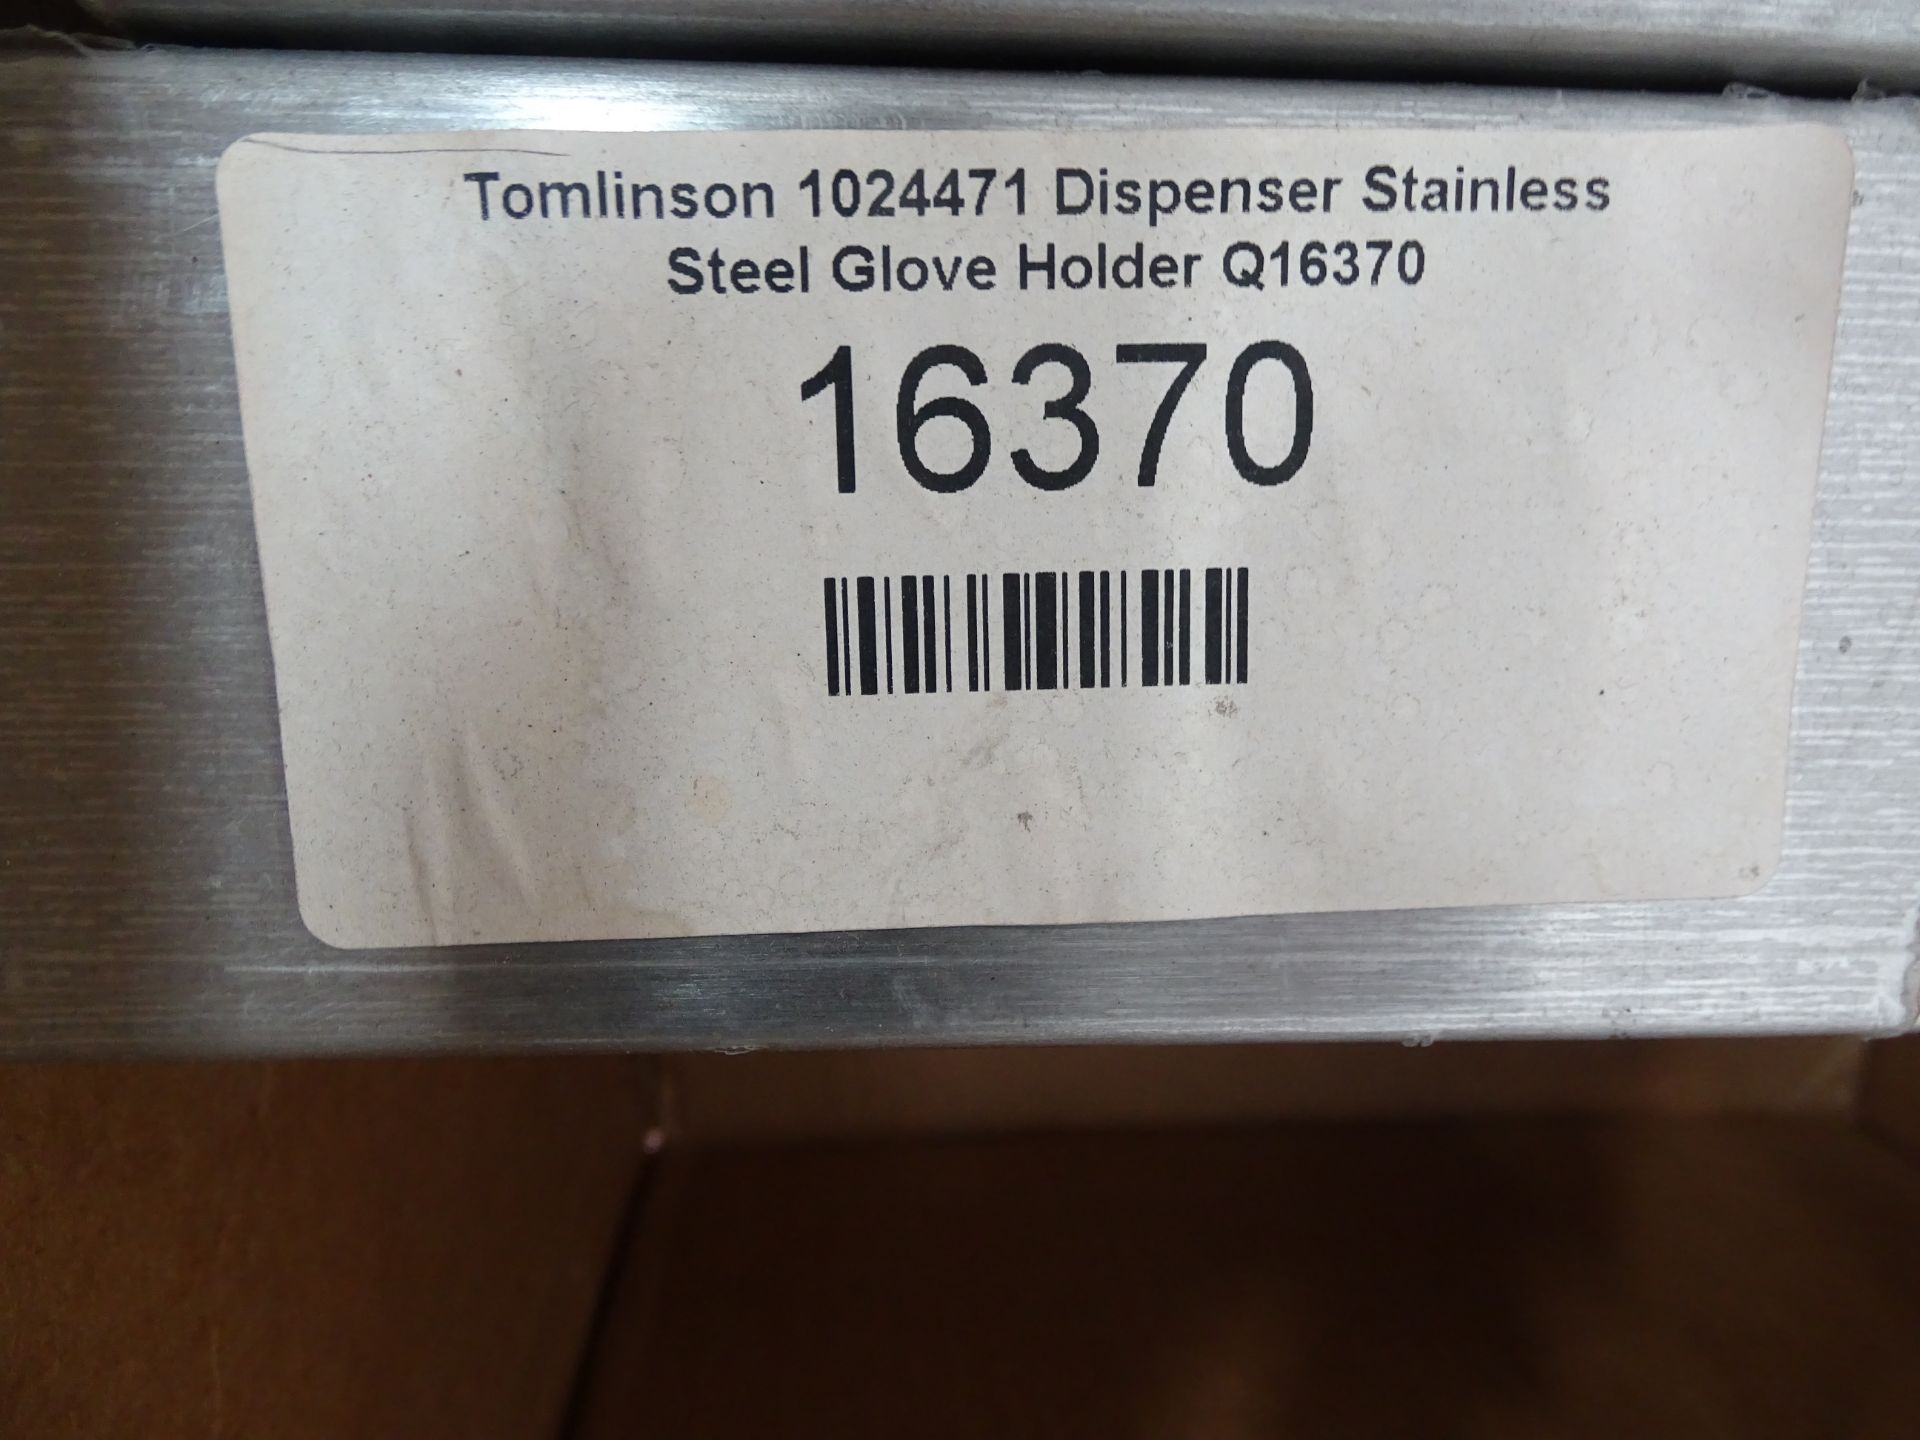 (9) Tomlinson 1024471 Dispenser Stainless Steel Glove Holder Q16370 - Image 3 of 3